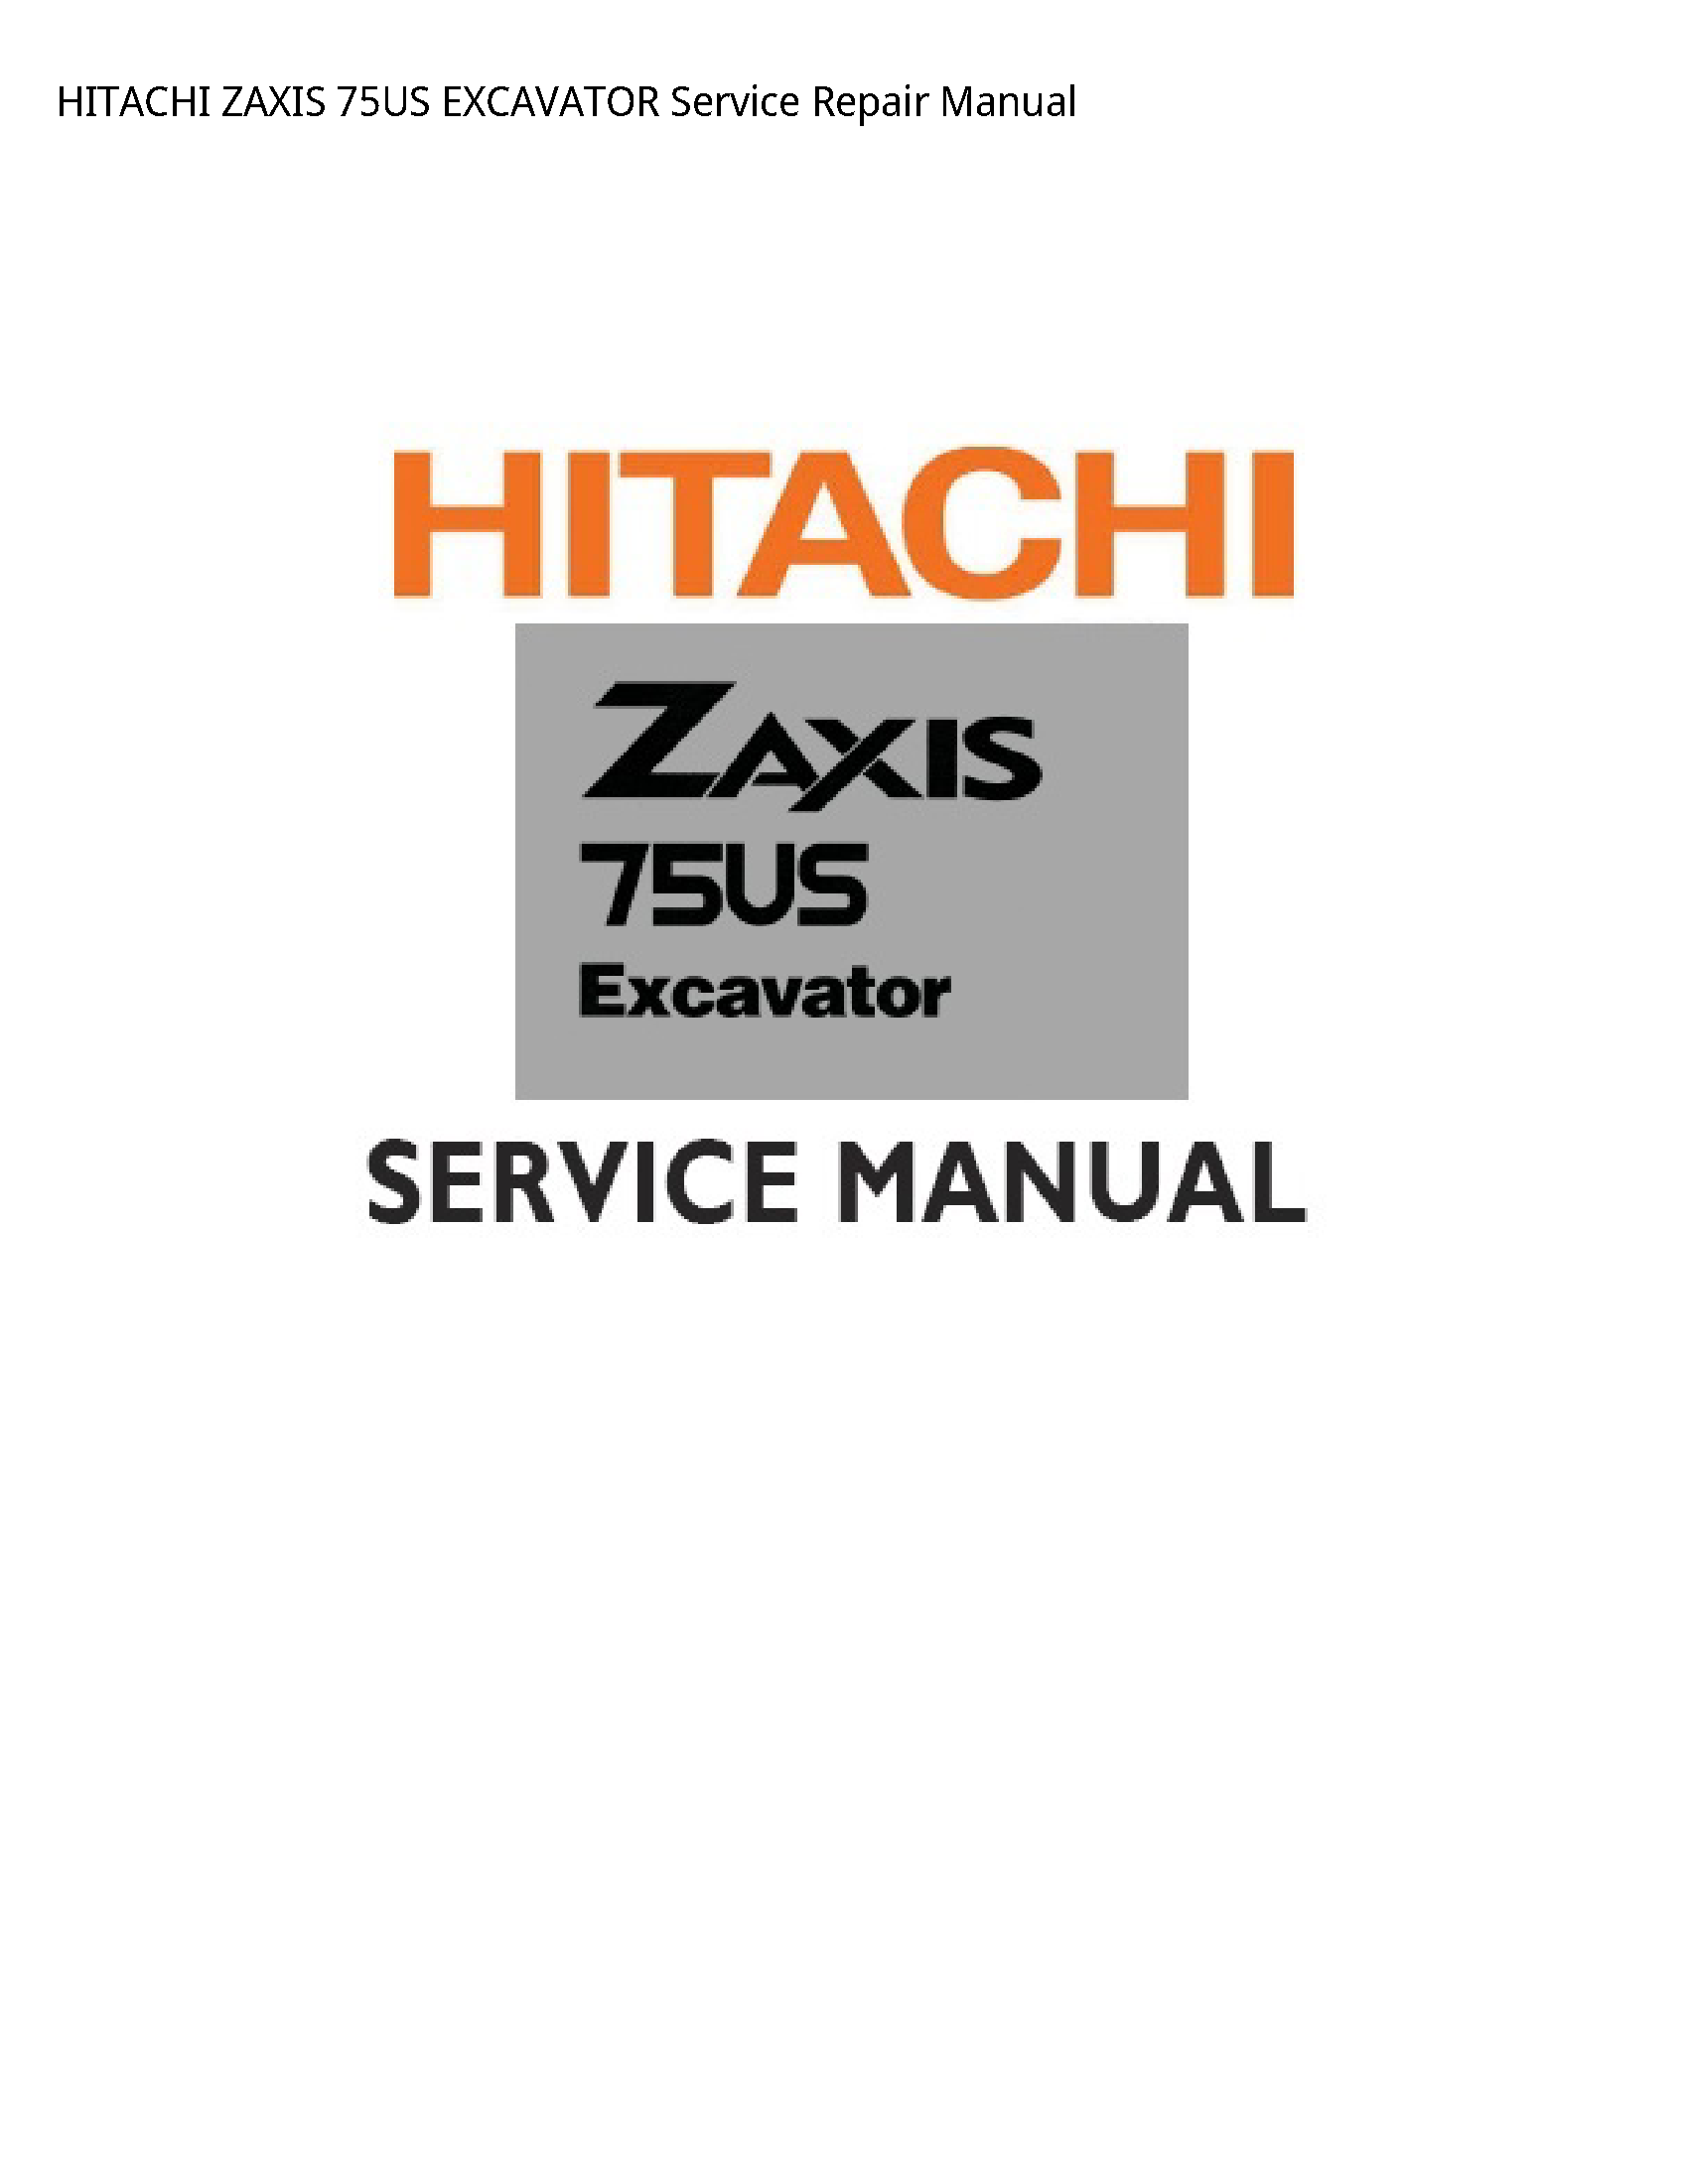 Hitachi 75US ZAXIS EXCAVATOR manual